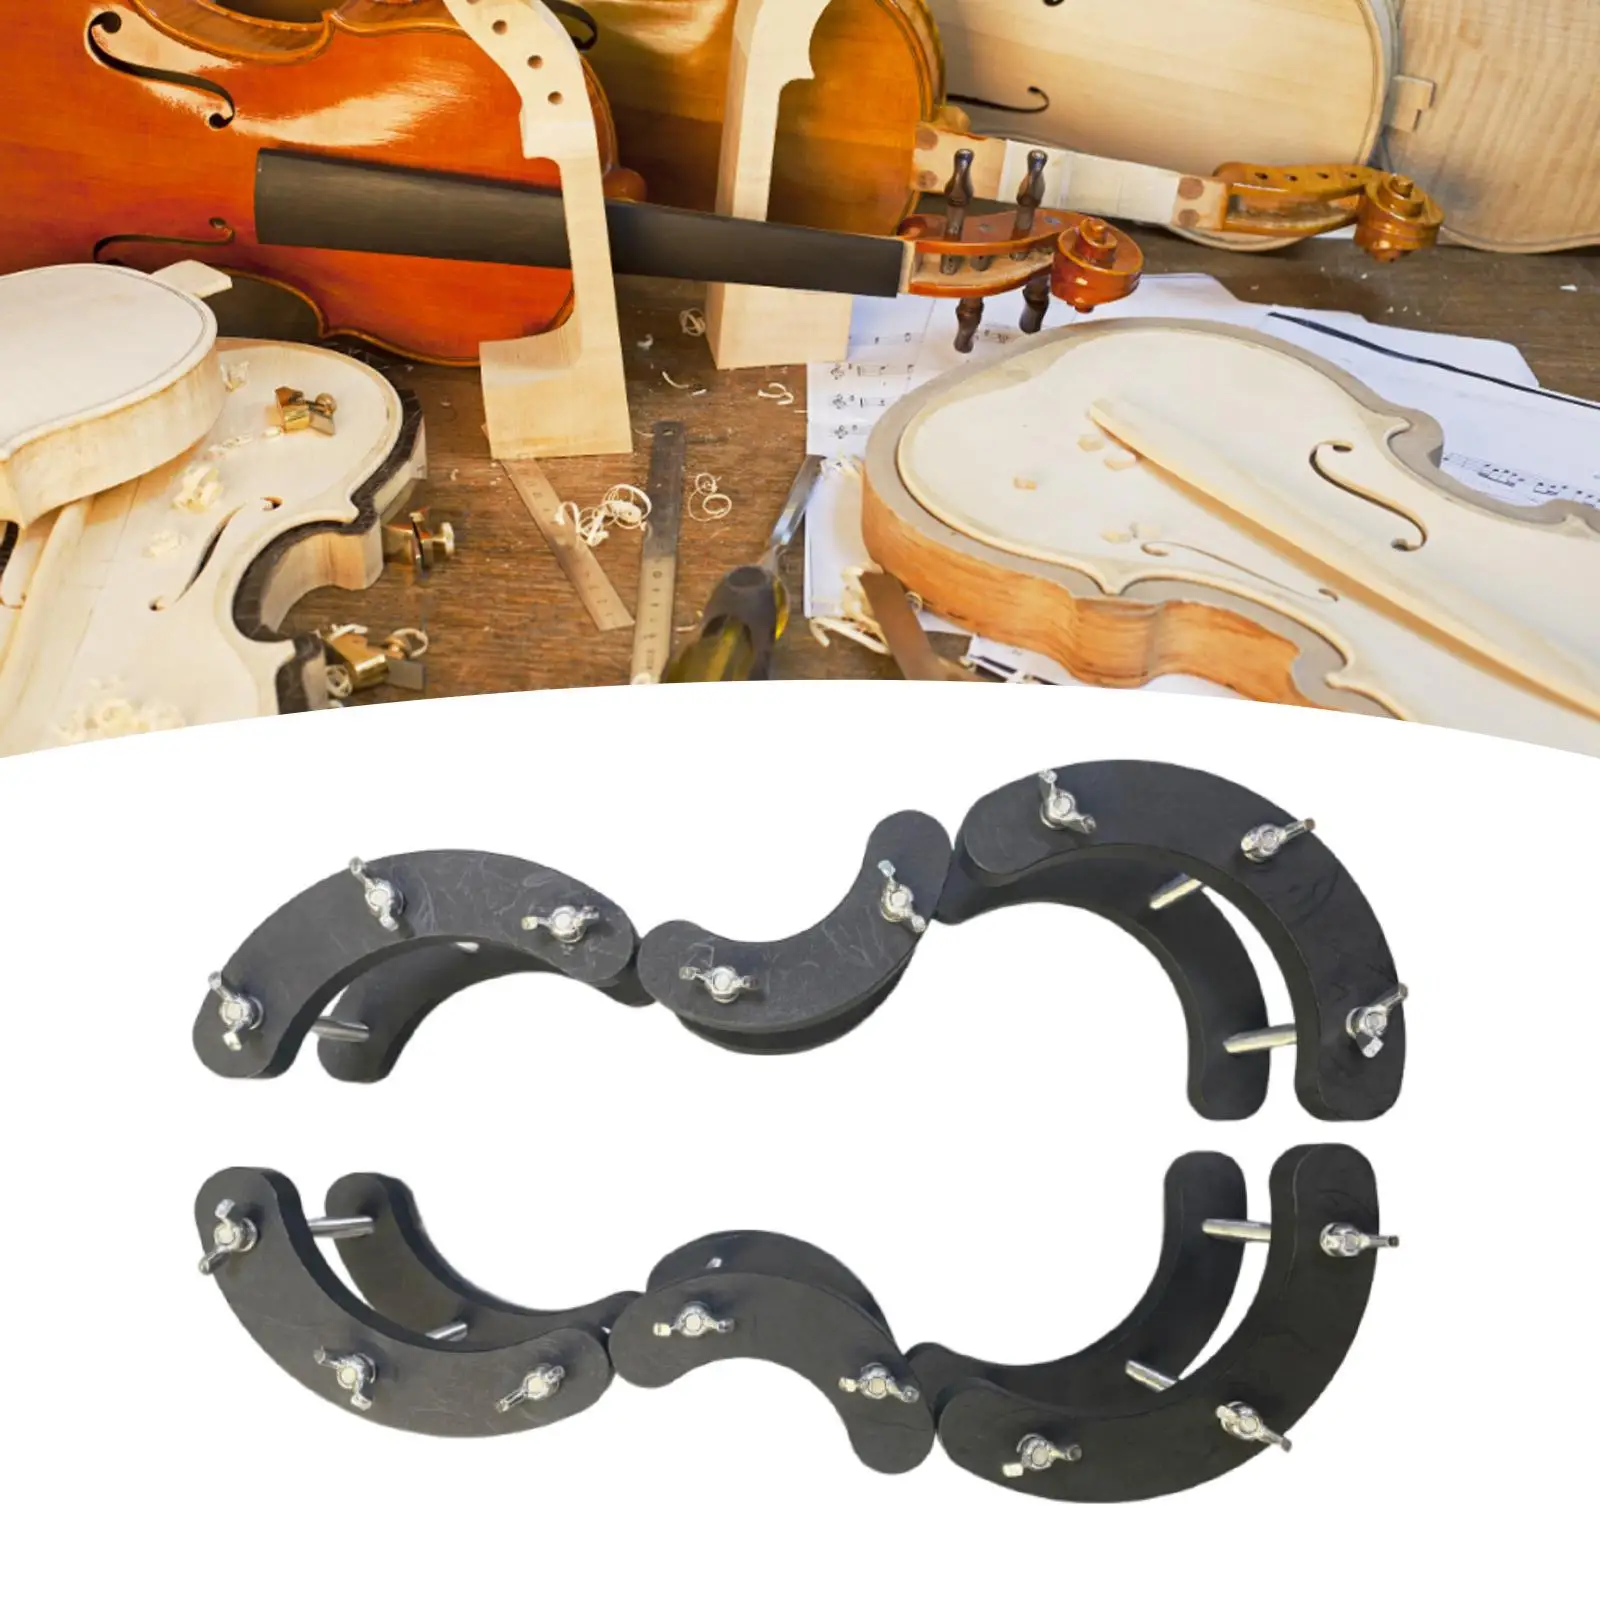 6x Cello Repair Tool Repair Violin Making Portable Luthier Top and Back Gluing Clamp for Fixing Viola Violin Maintenance